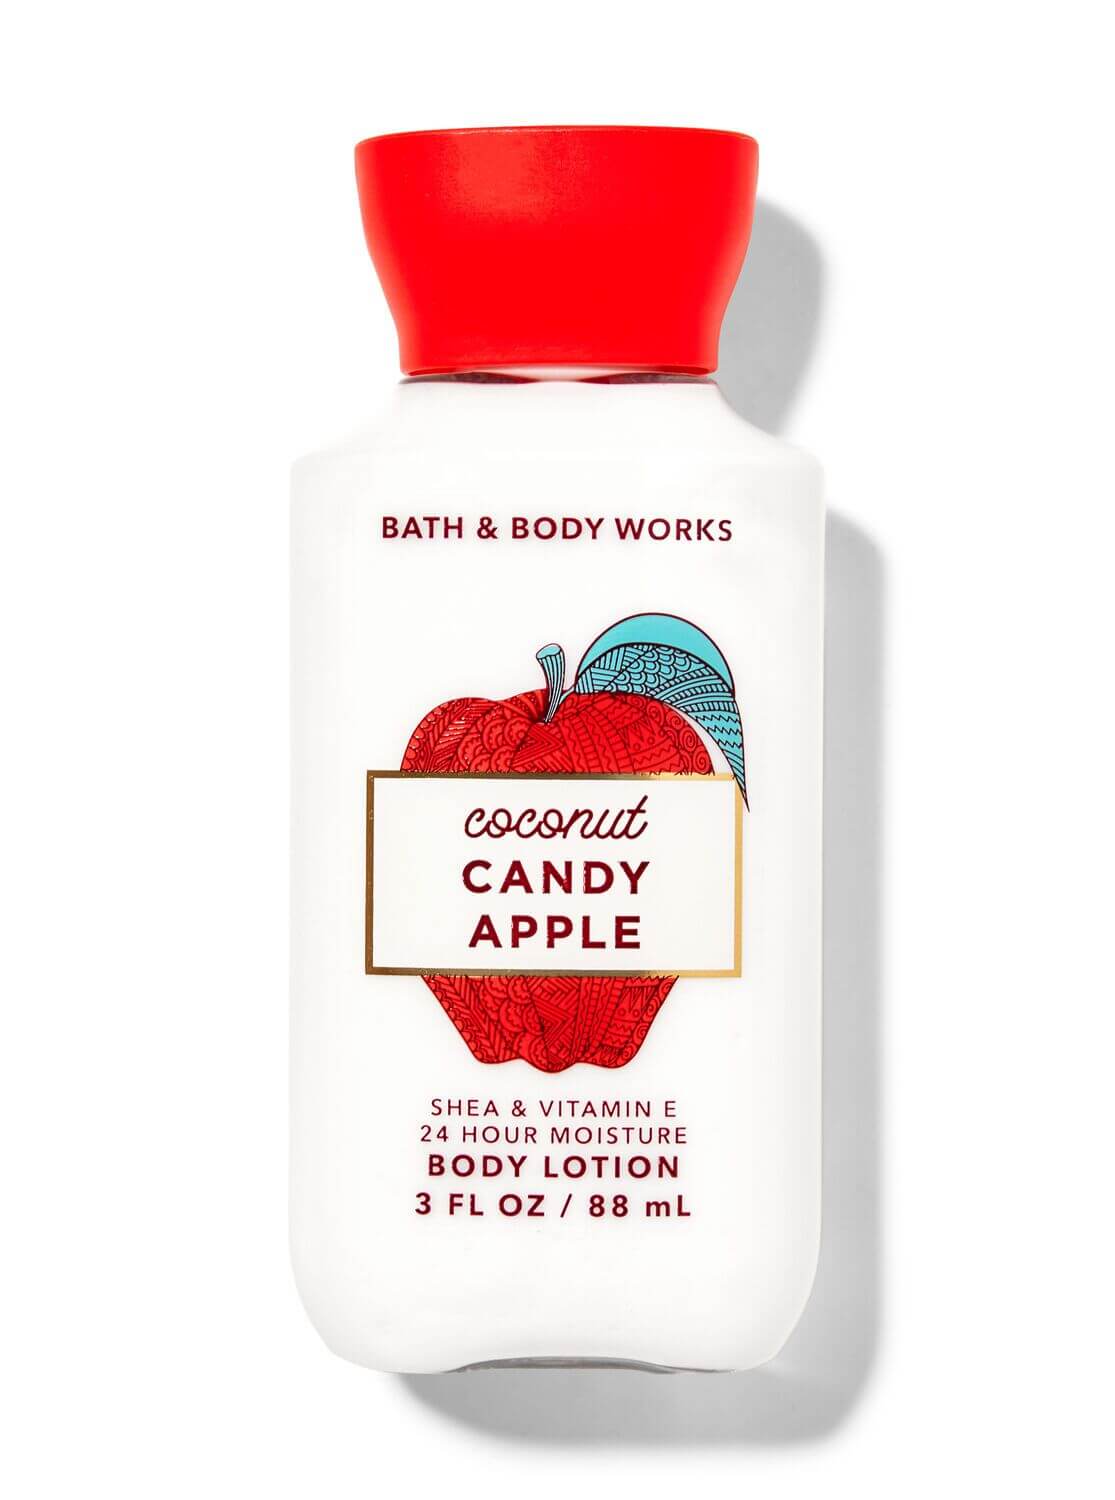 Bath & Body Works Coconut Candy Apple Travel Size Body Lotion 88ml